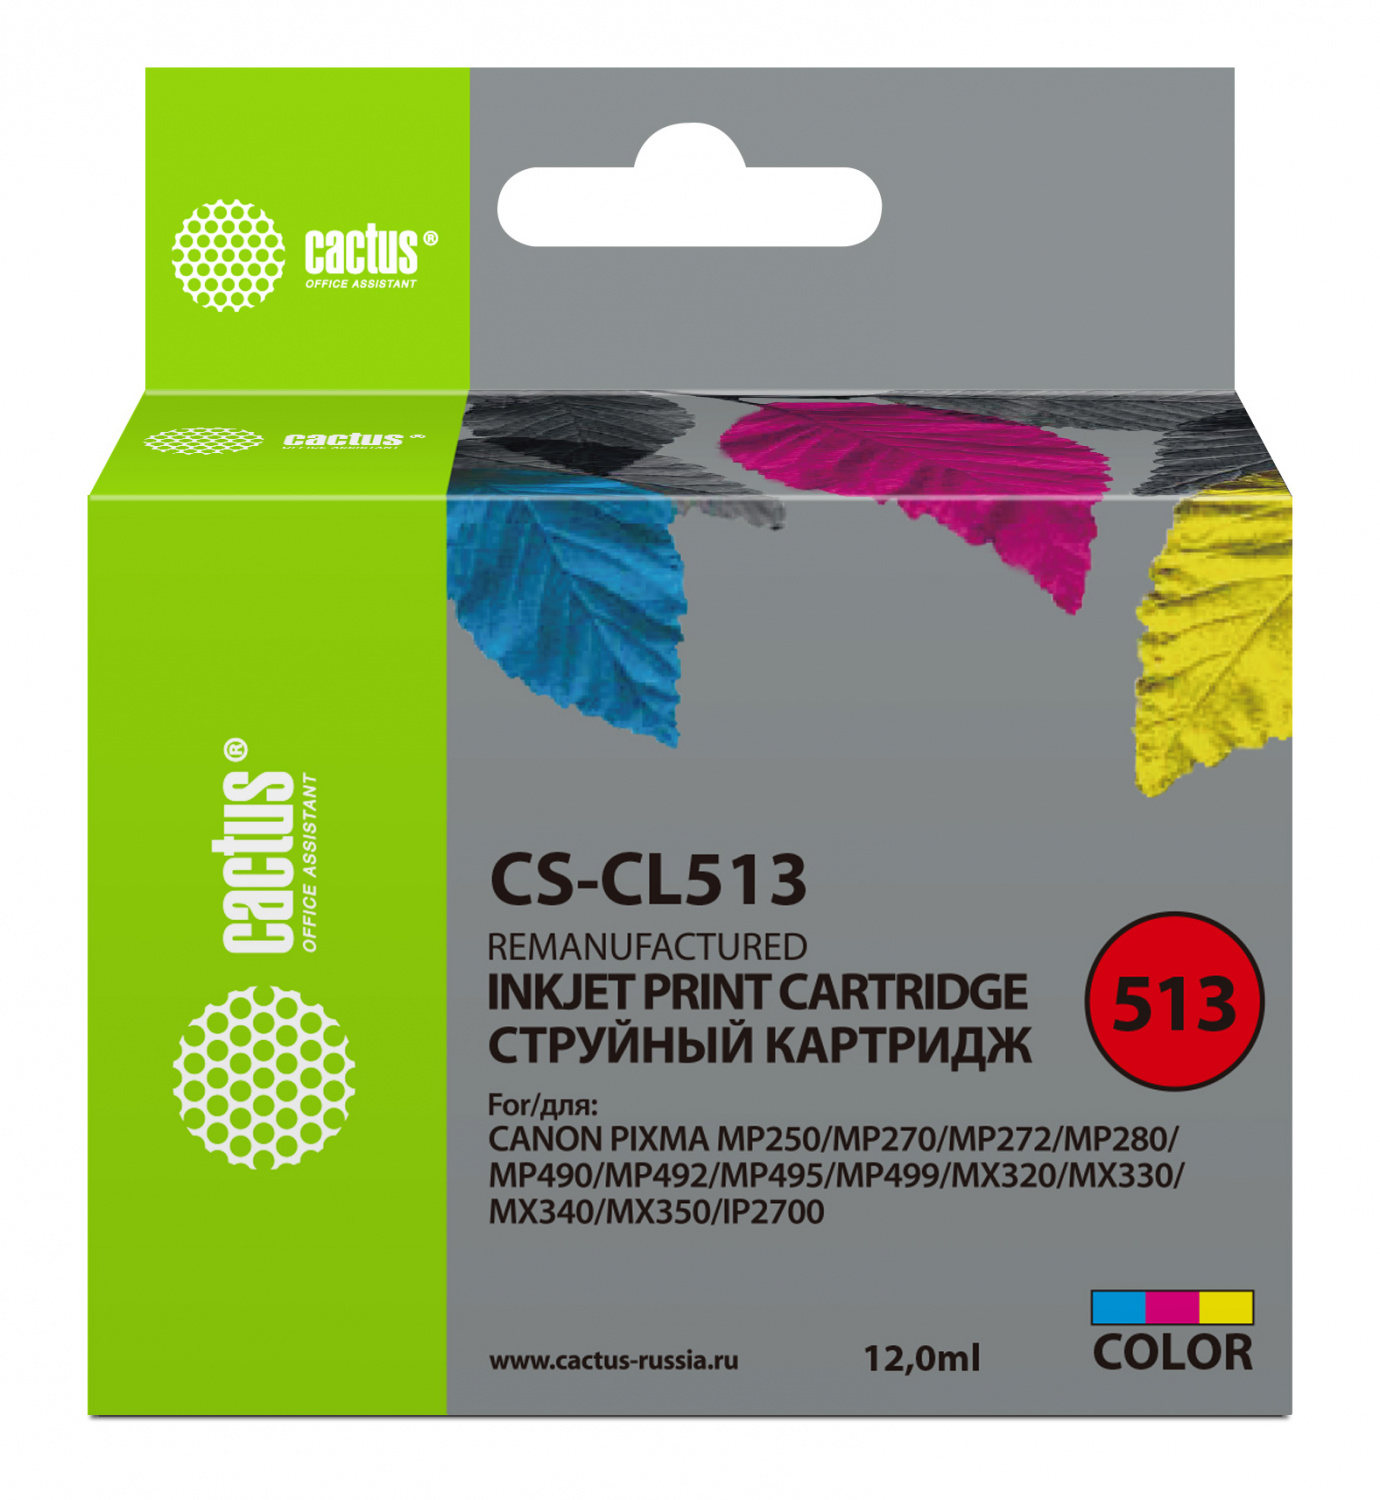   Cactus CS-CL513  (15)  Canon Pixma MP240/MP250